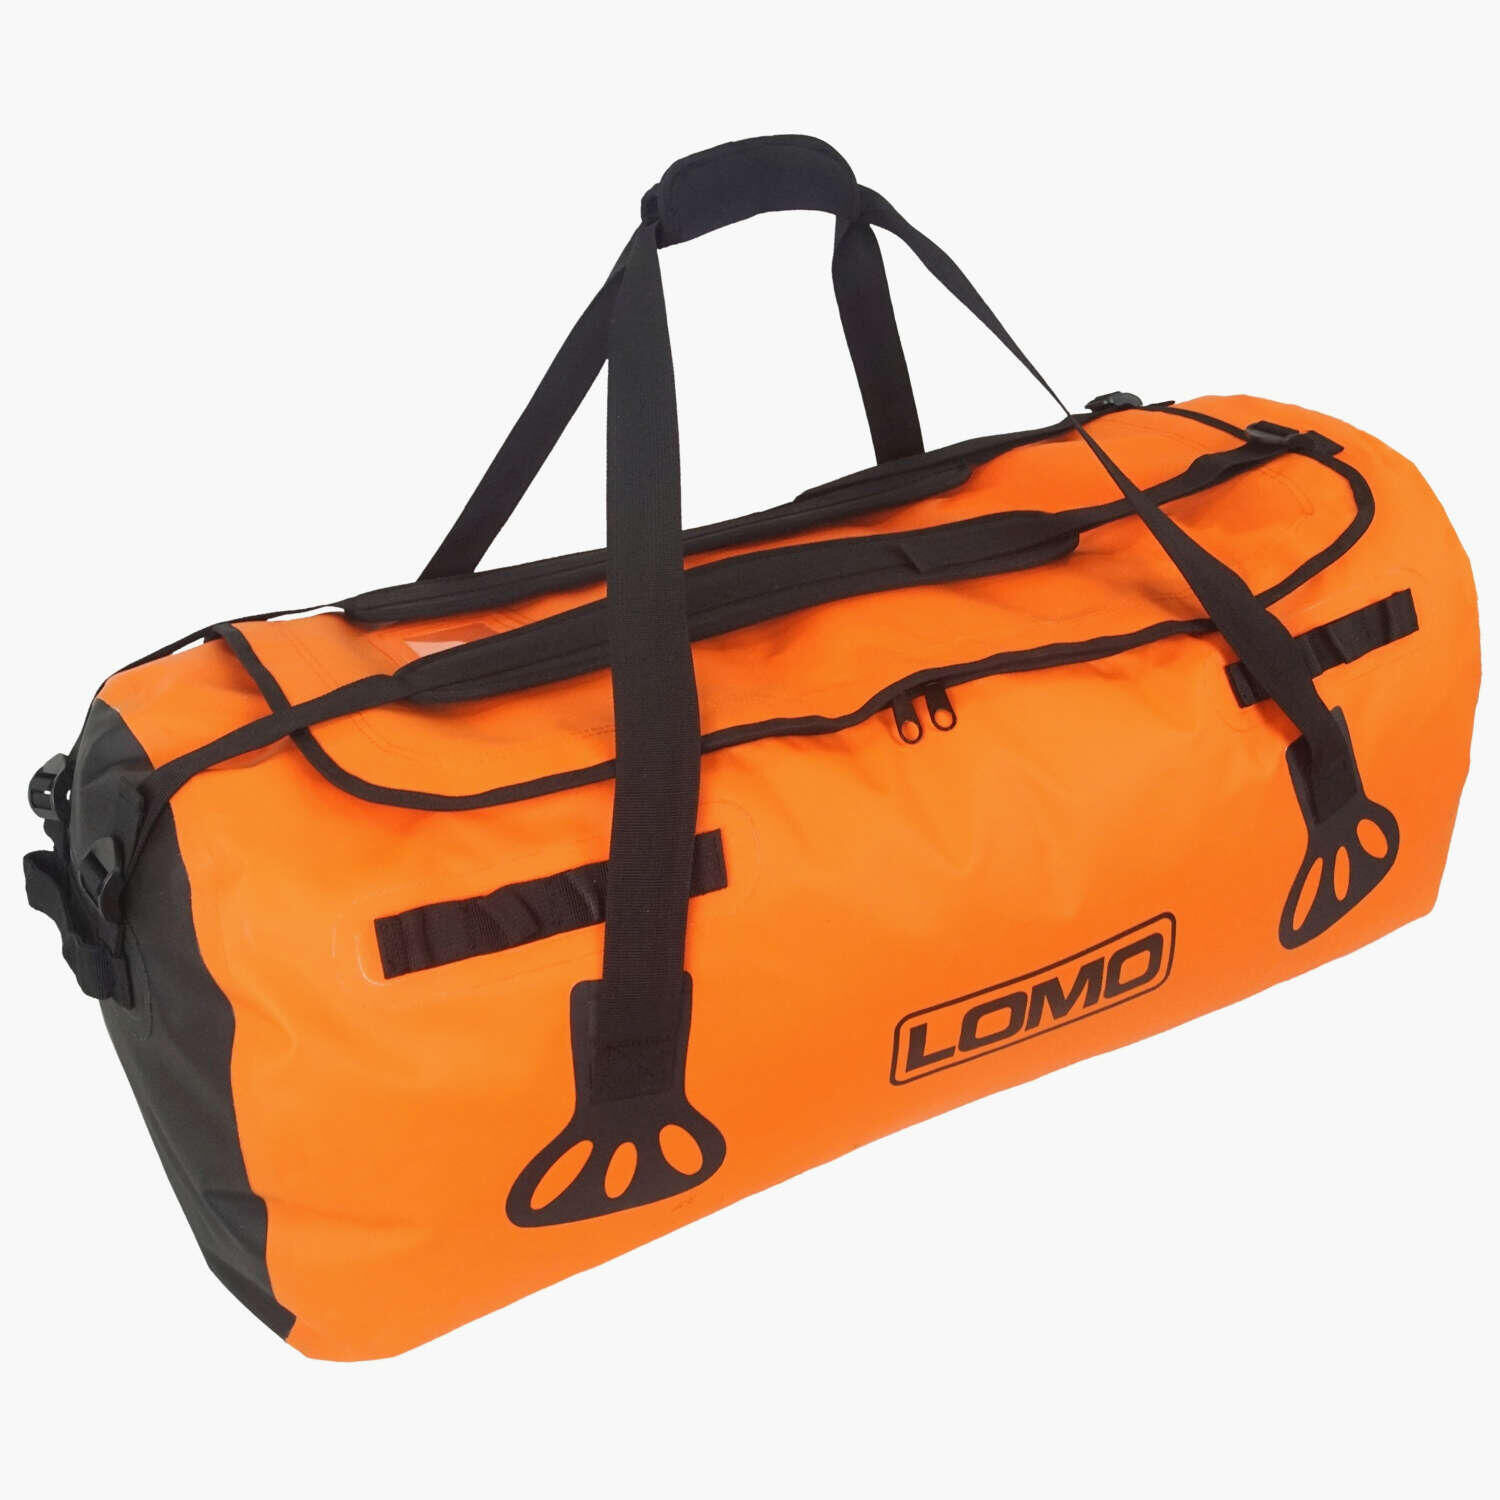 LOMO Lomo Blaze Expedition Holdall - Orange 100L